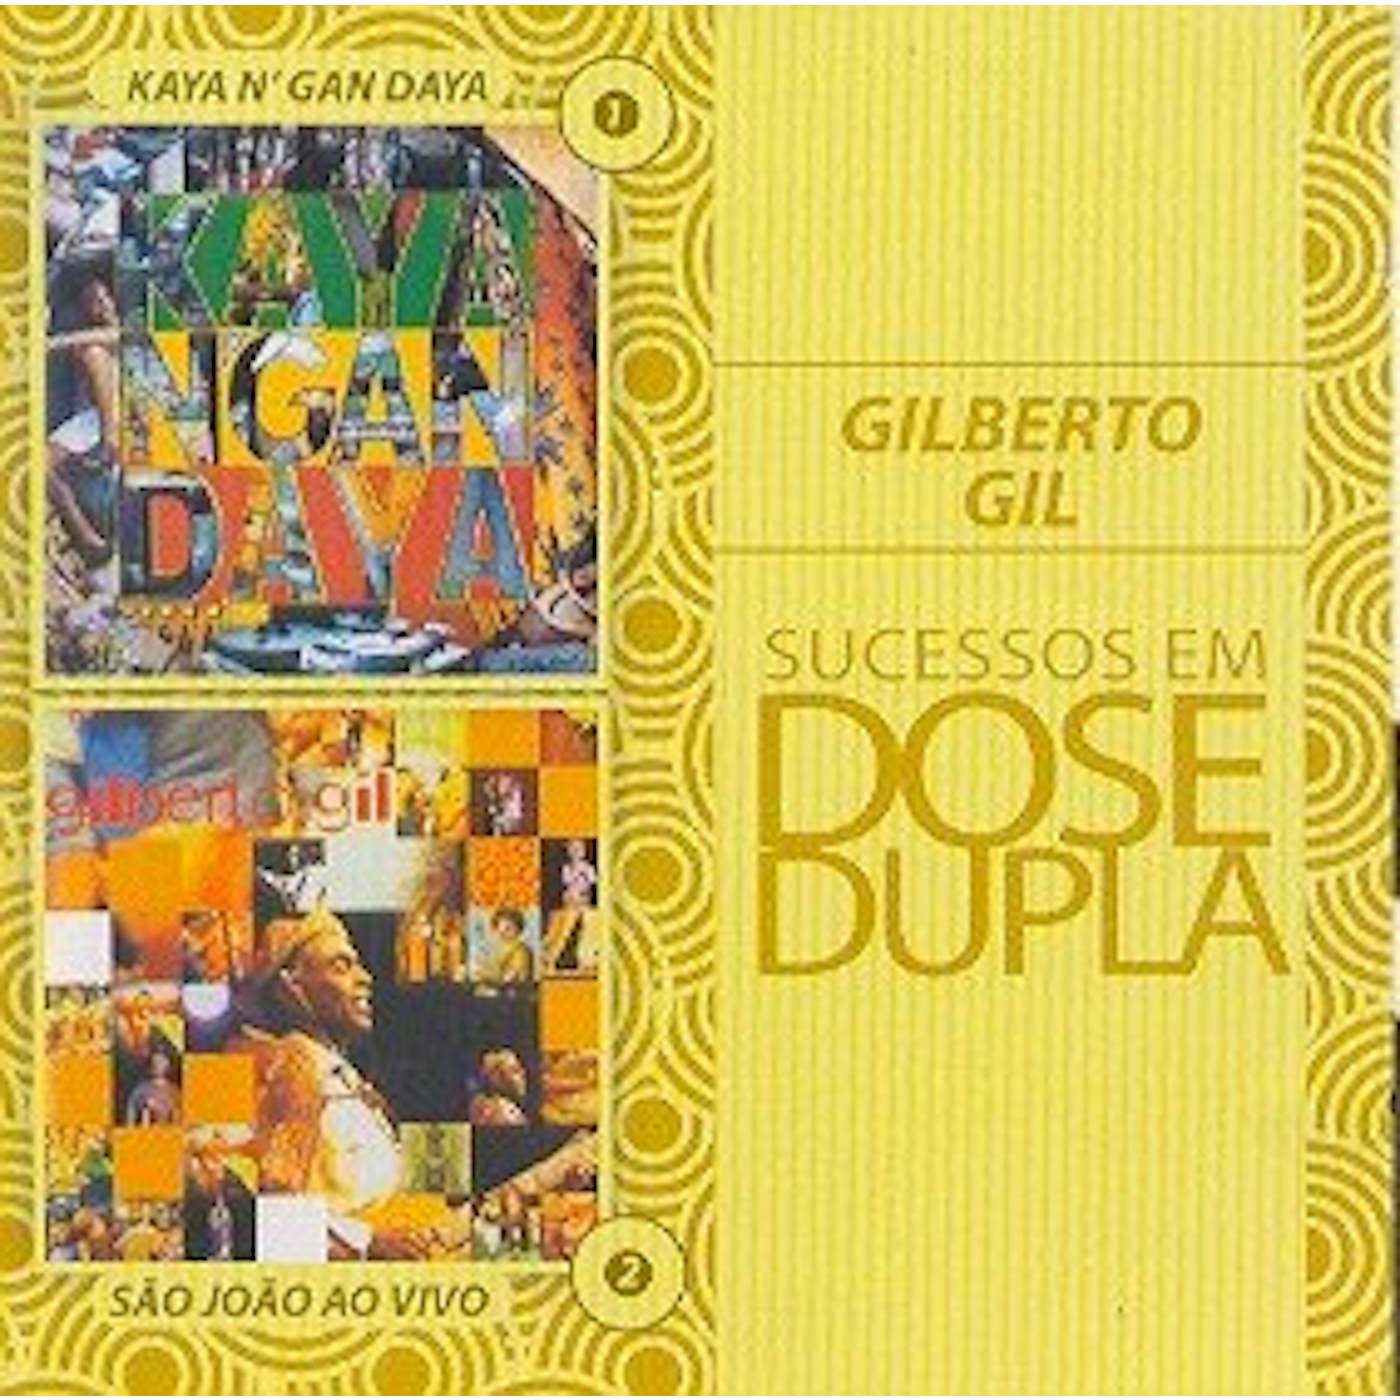 Gilberto Gil DOSE DUPLA 2 CD